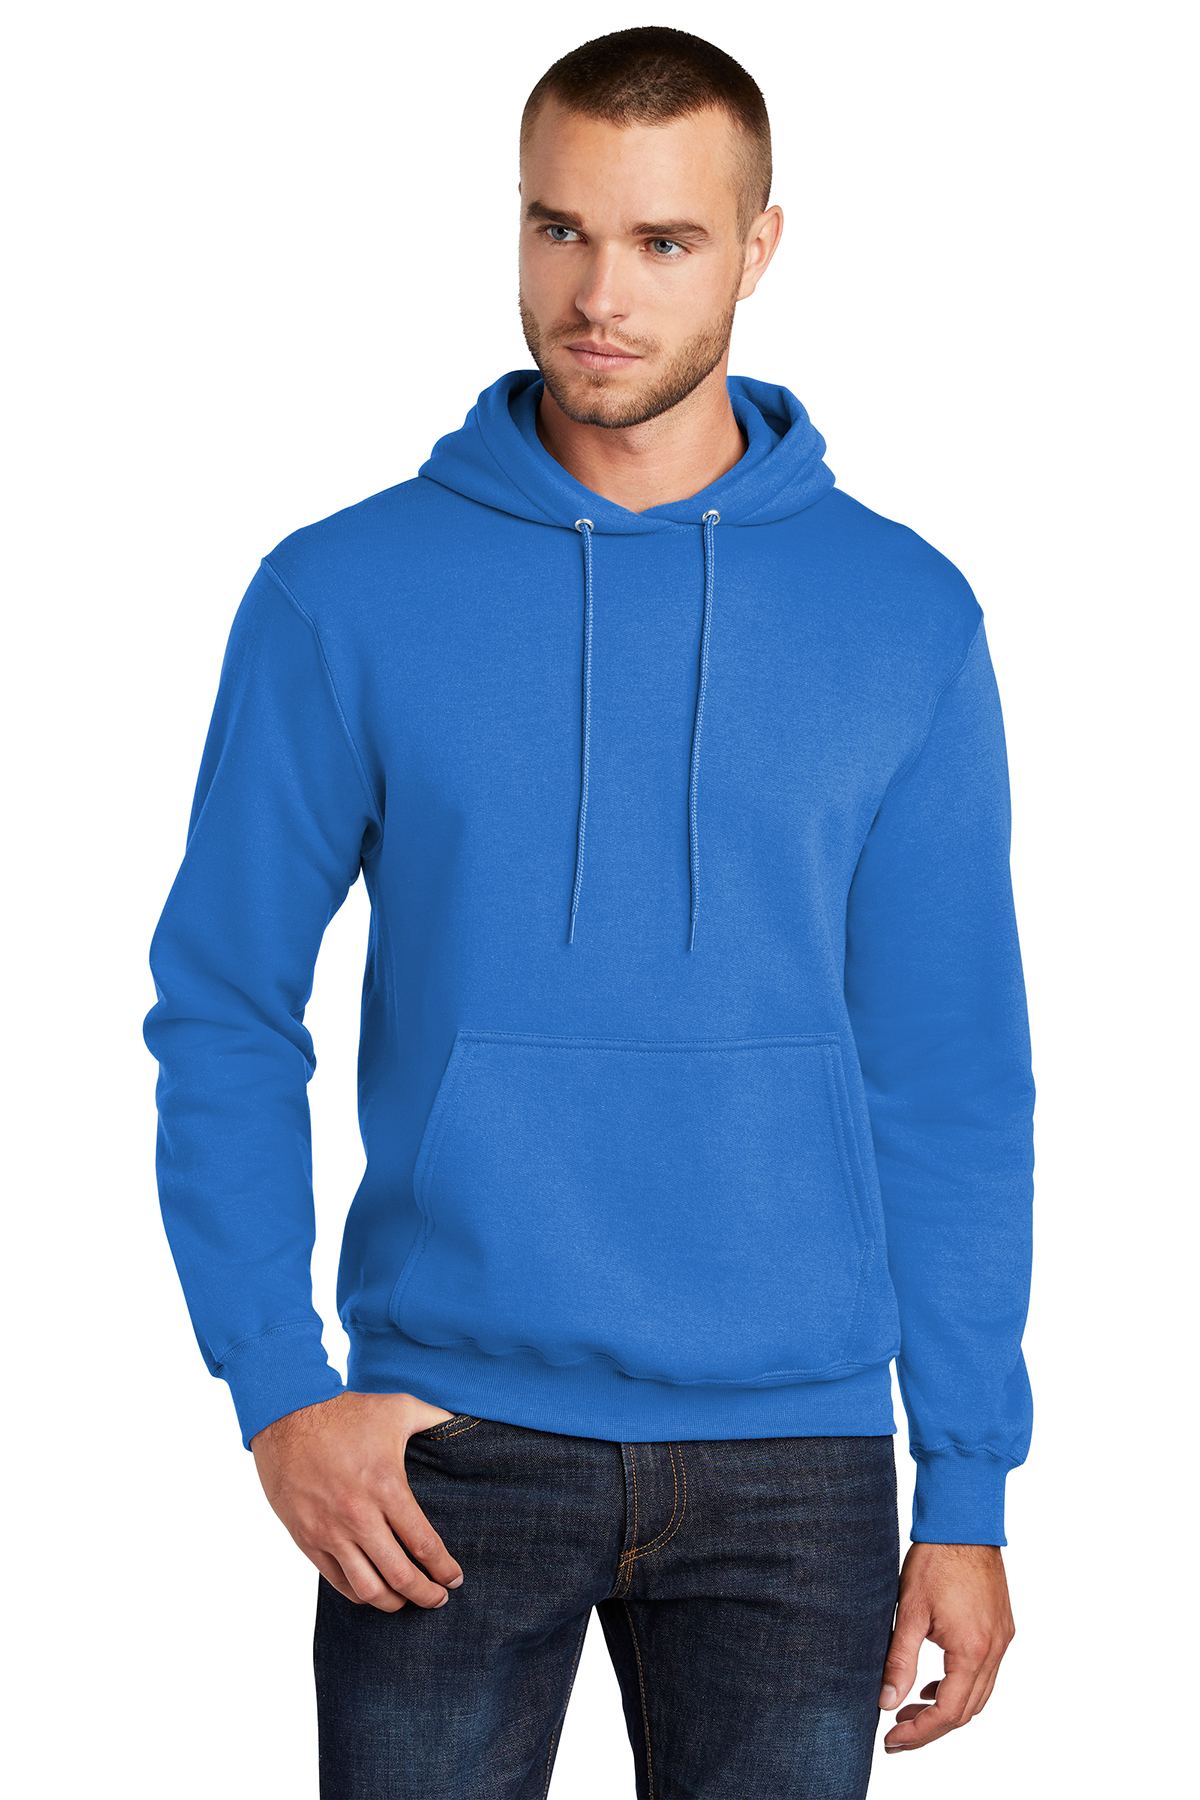 Men's - Core Sport Zip Hoodie in Dress Blue